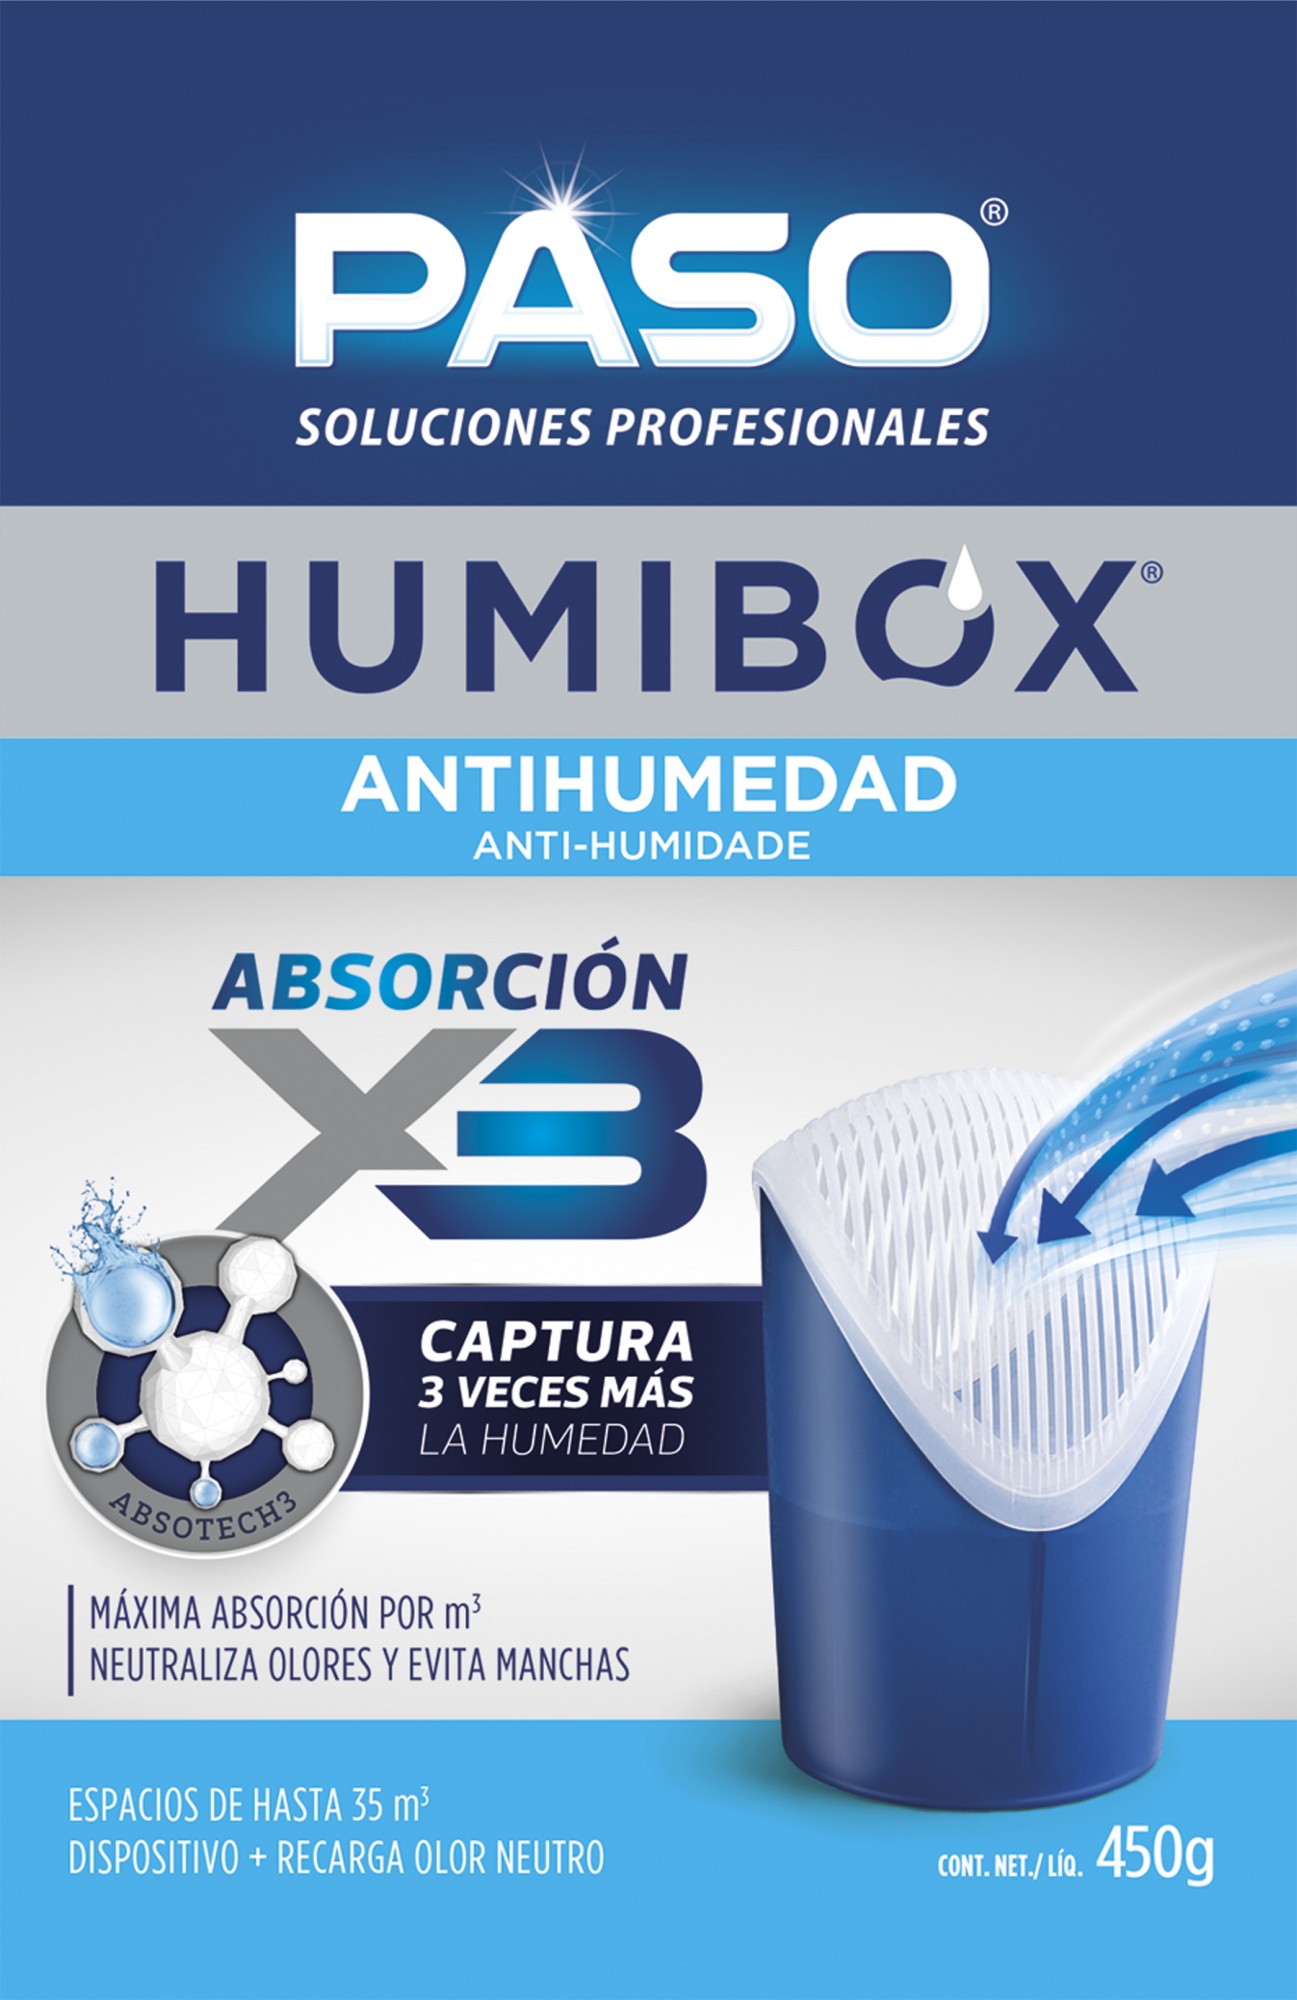 Aparato antihumedad Humibox - Paso Profesional